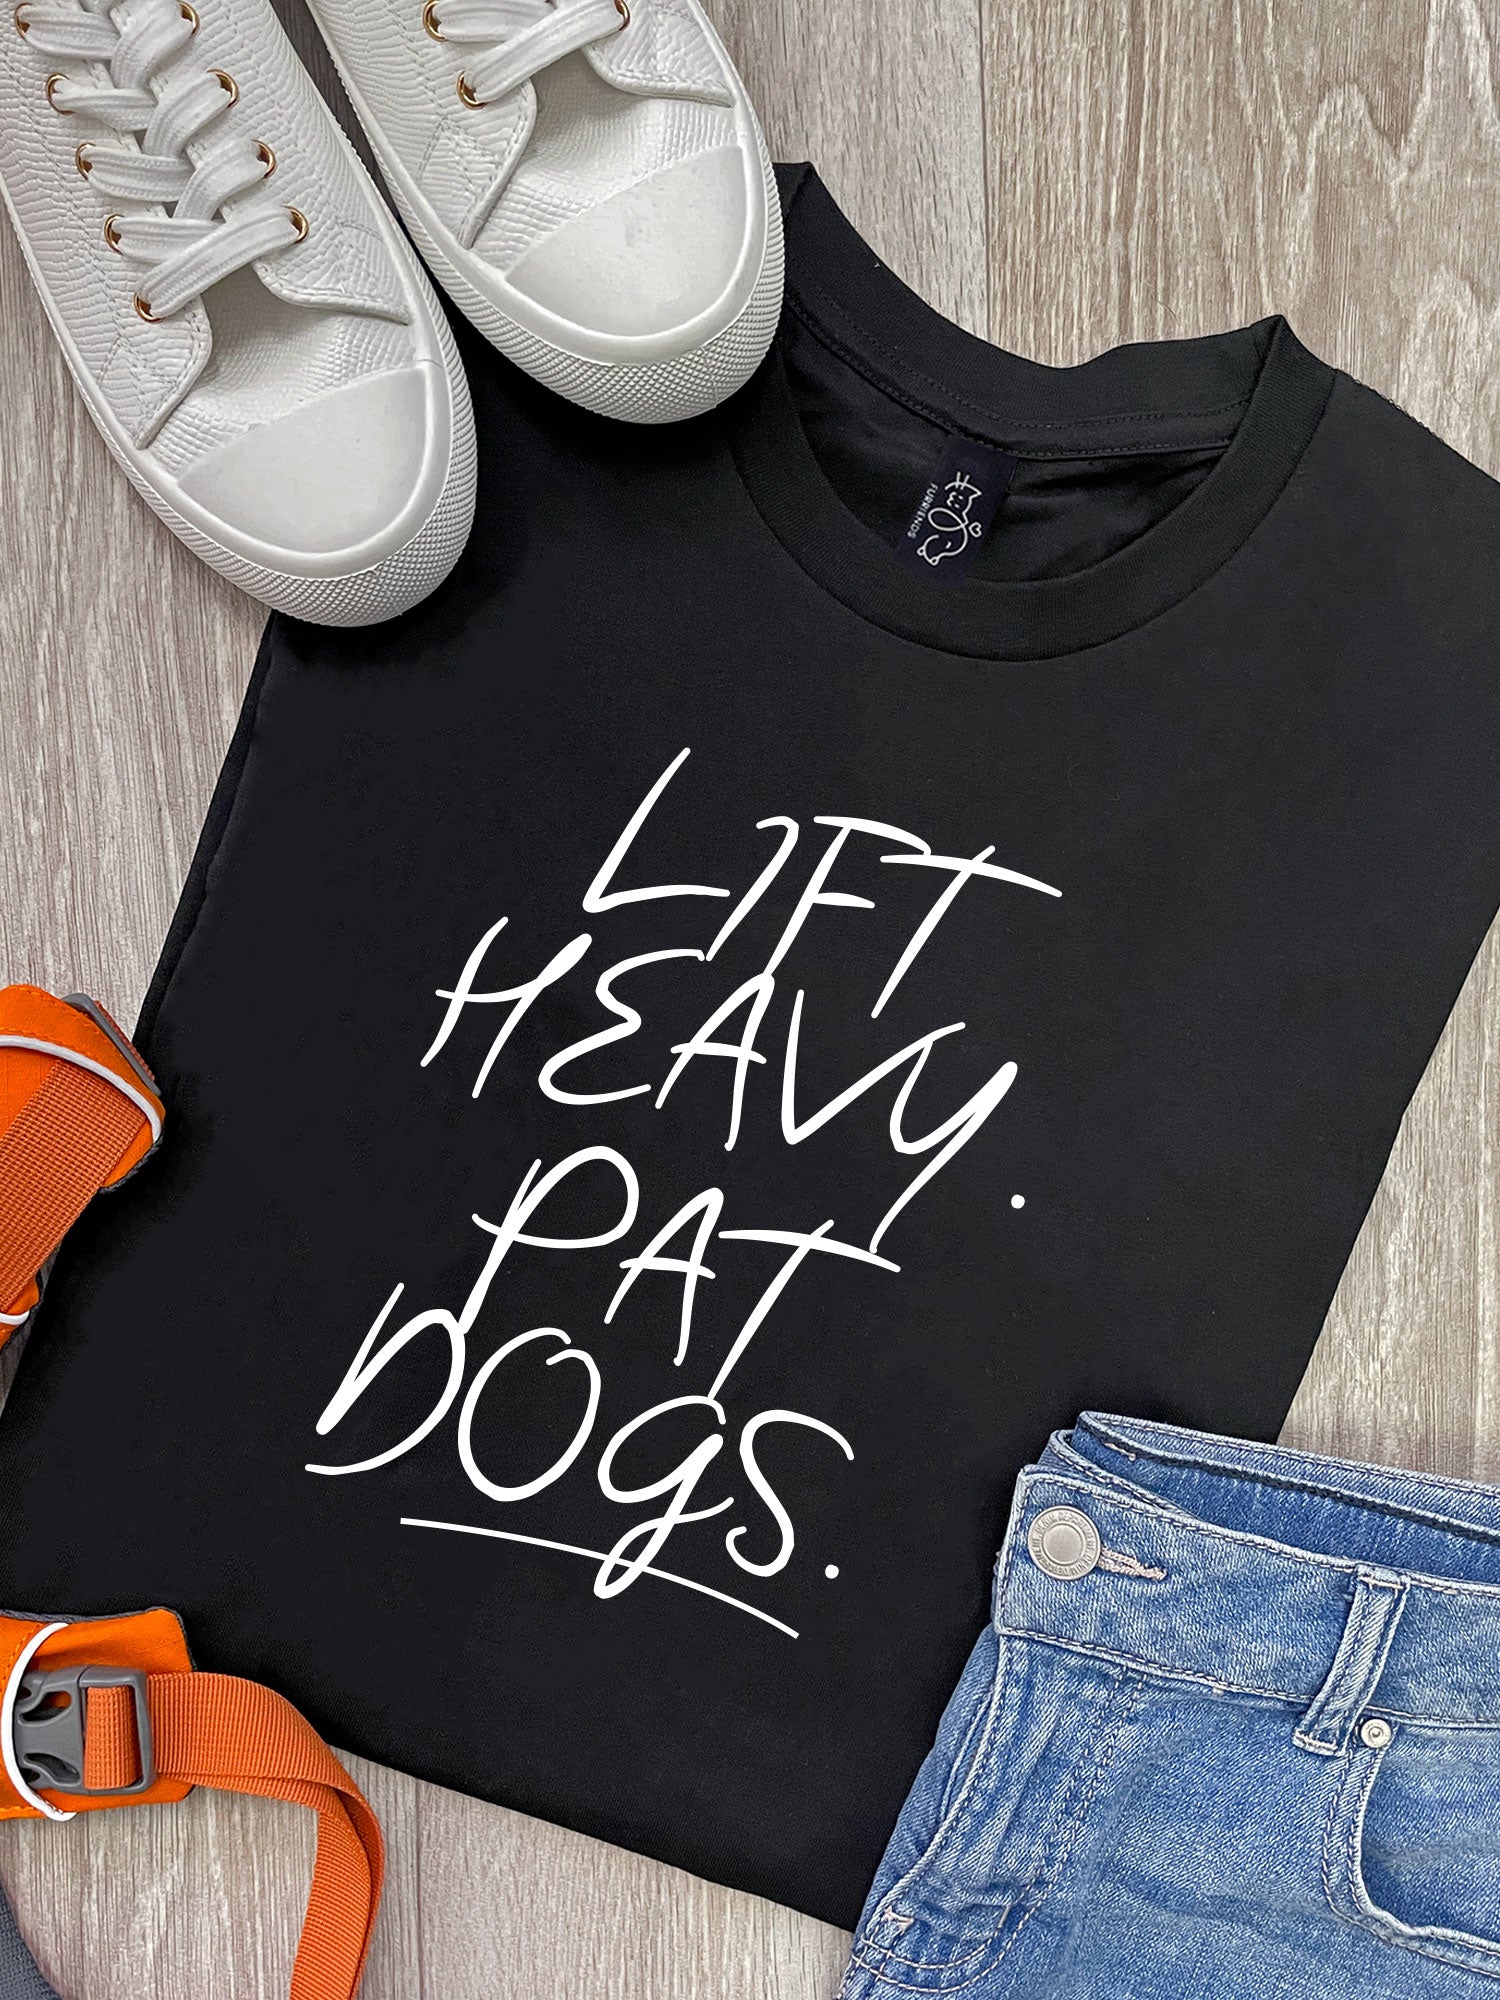 Lift Heavy Pat Dogs